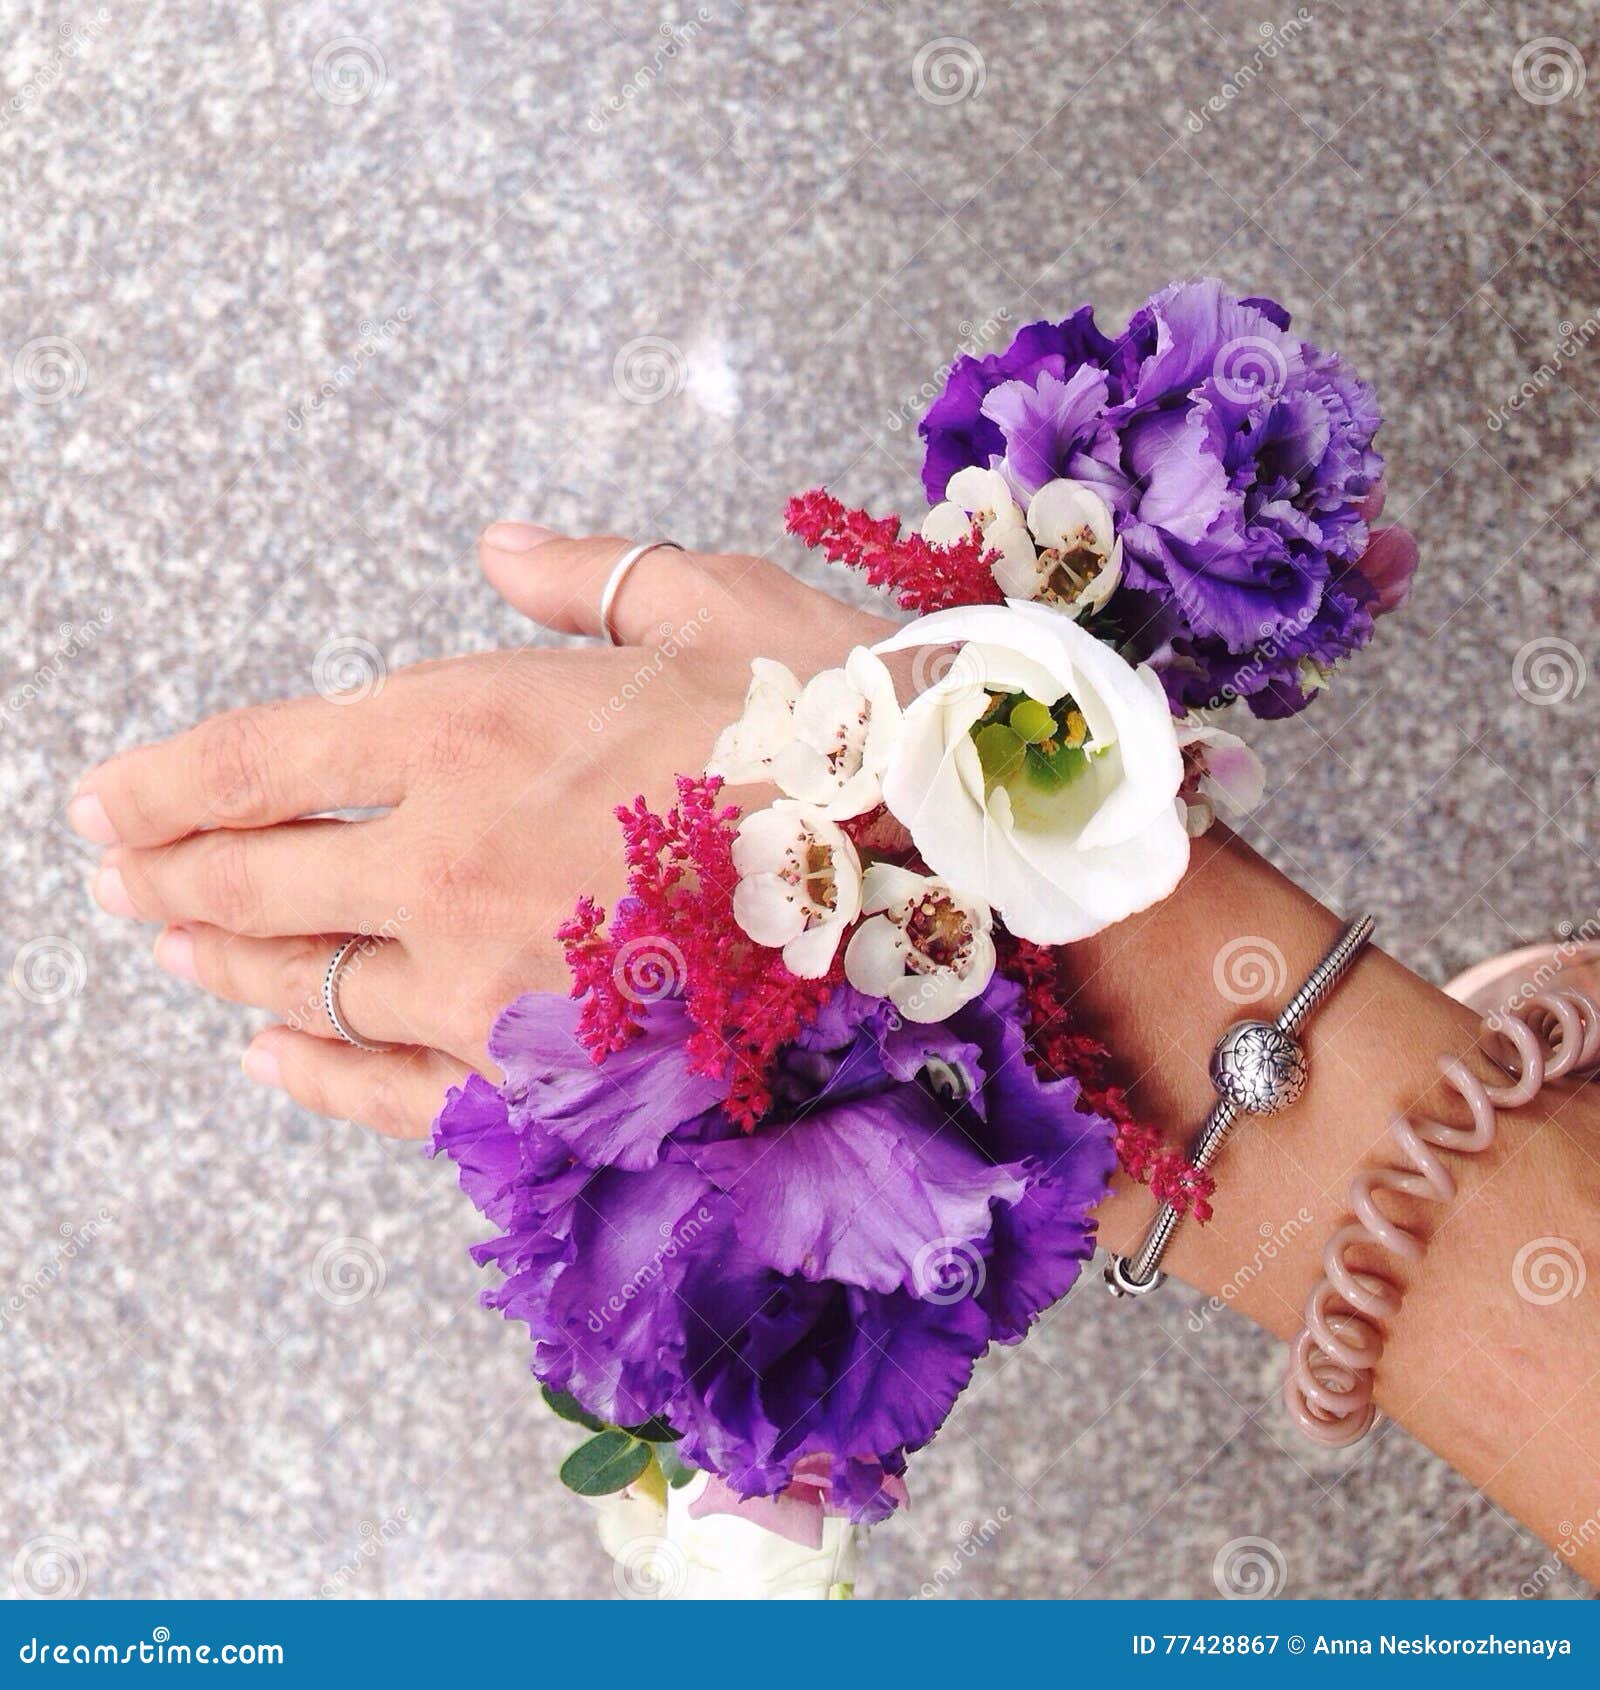 How To Make A Floral Bracelet / Wrist Corsage